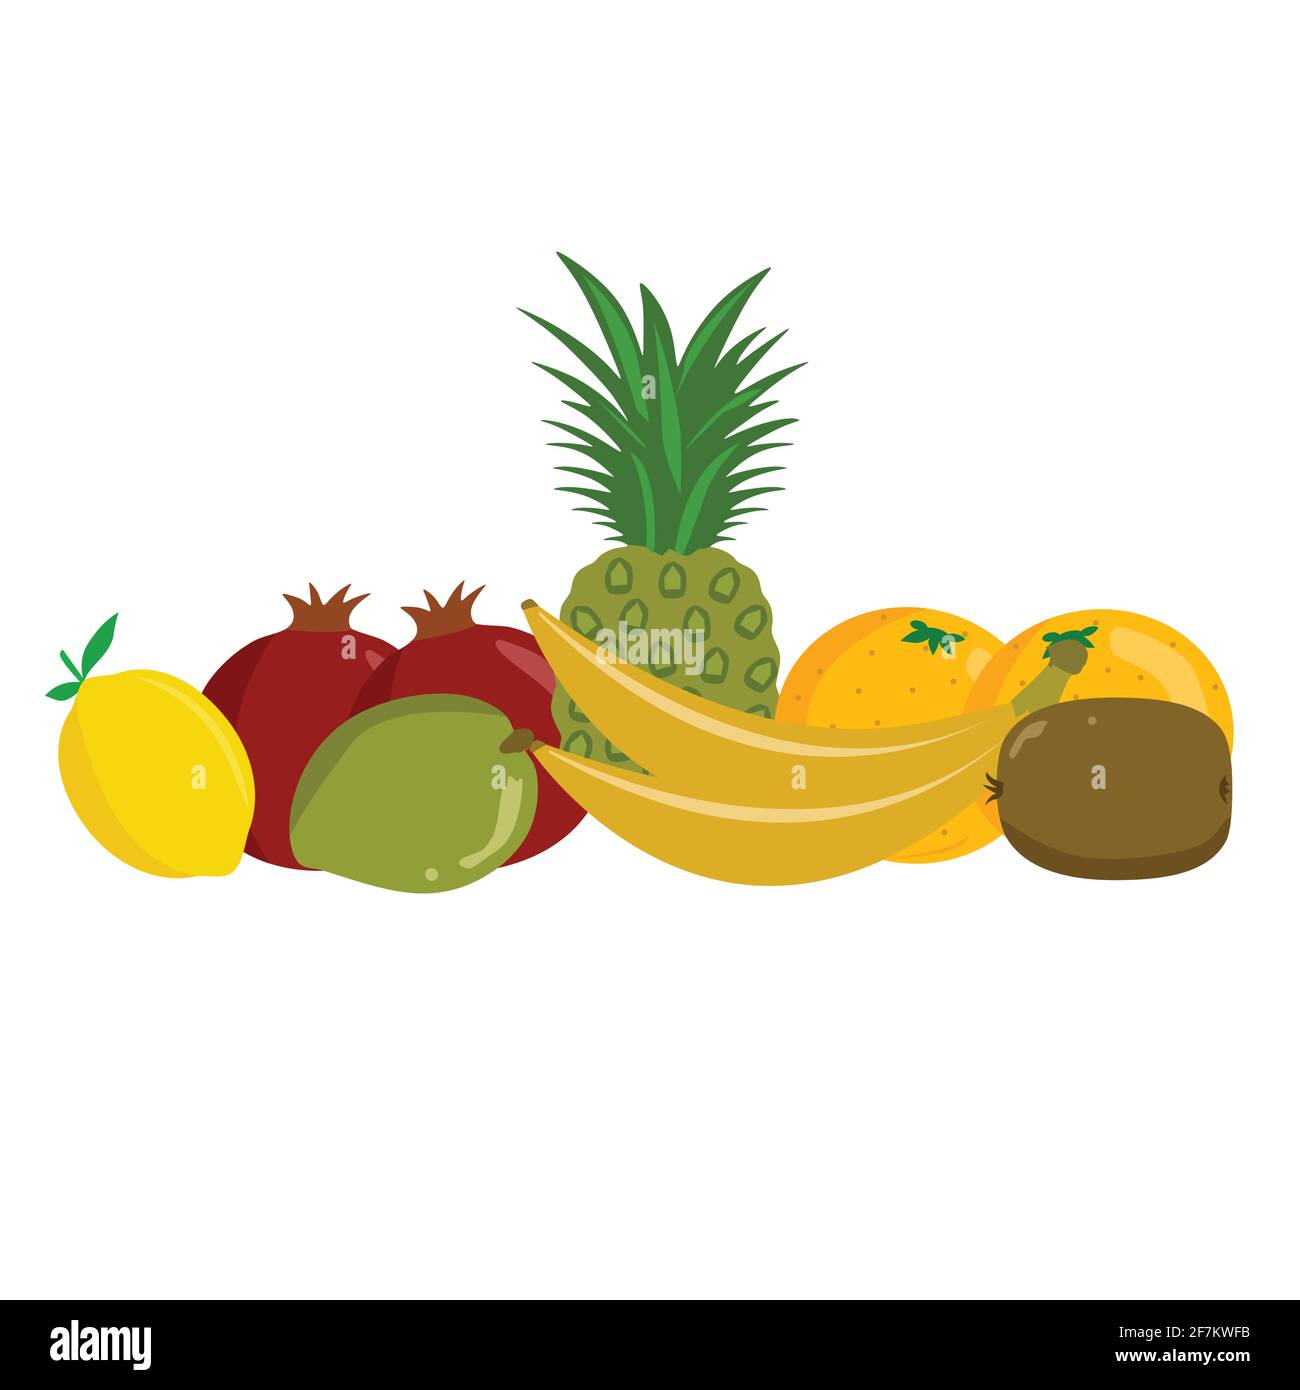 Fruit Banana Grapefruit Stock Vektorgrafiken kaufen   Seite 20   Alamy